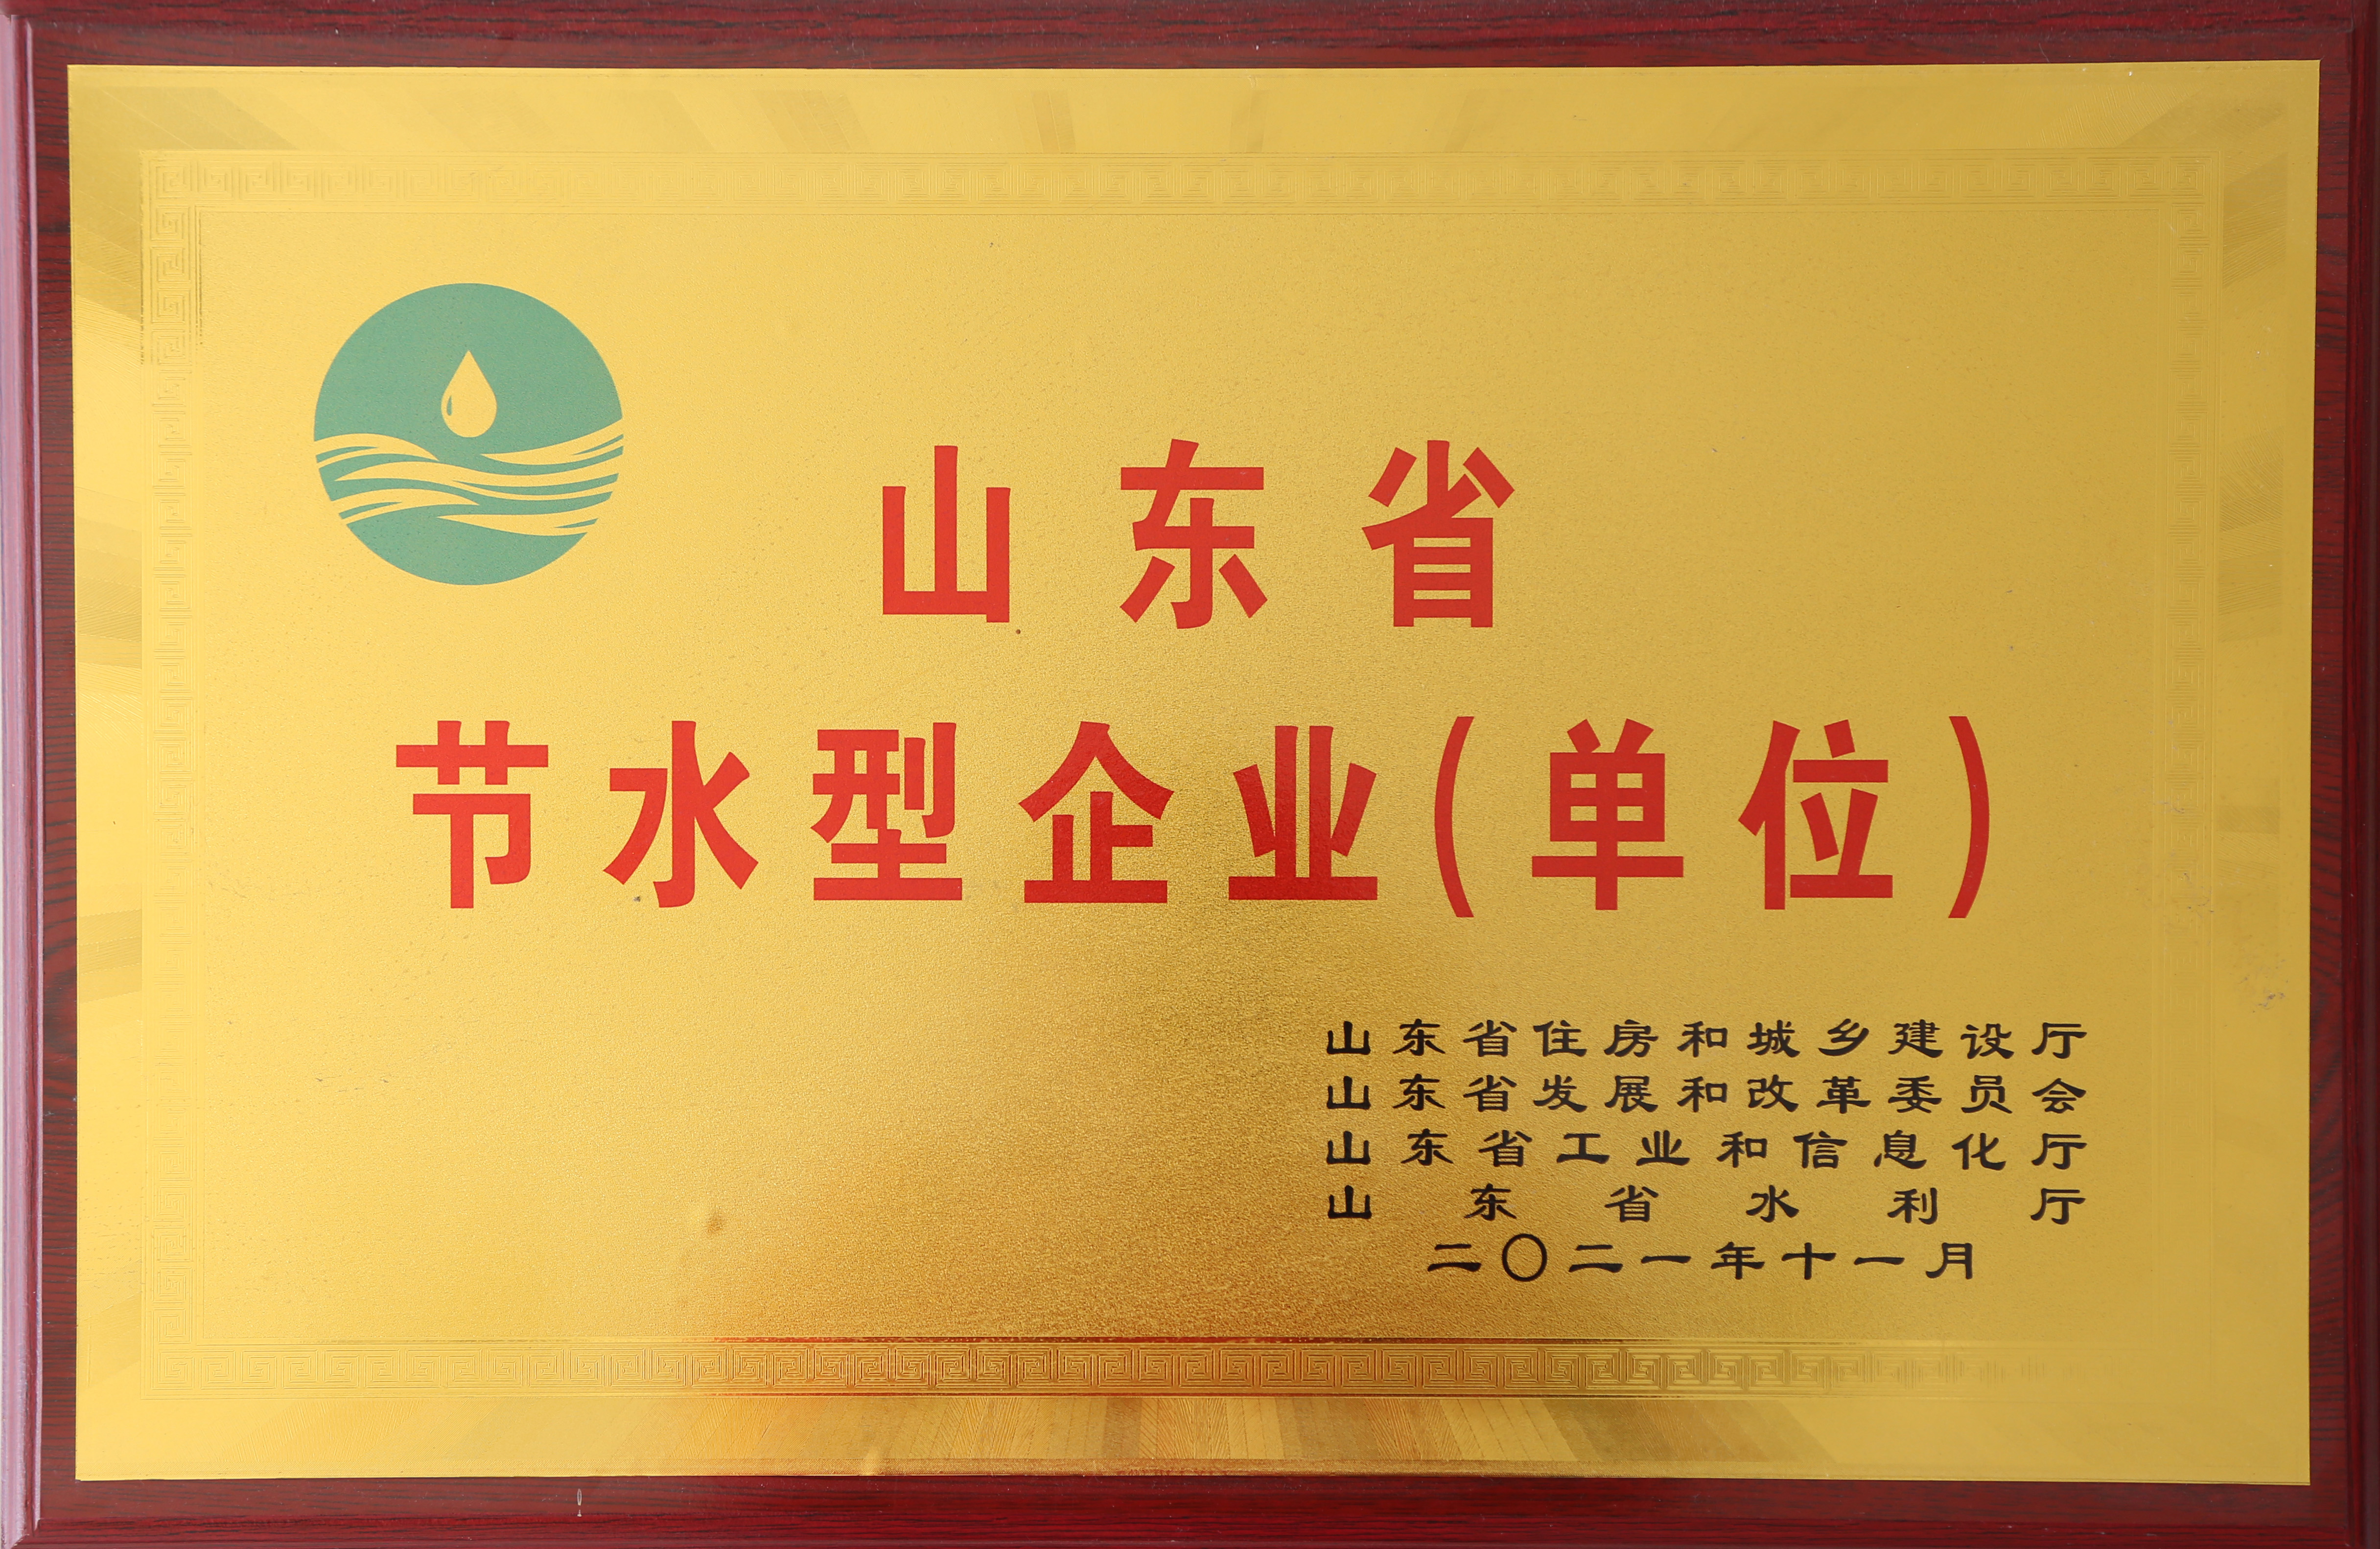 Water-saving enterprise in Shandong Province